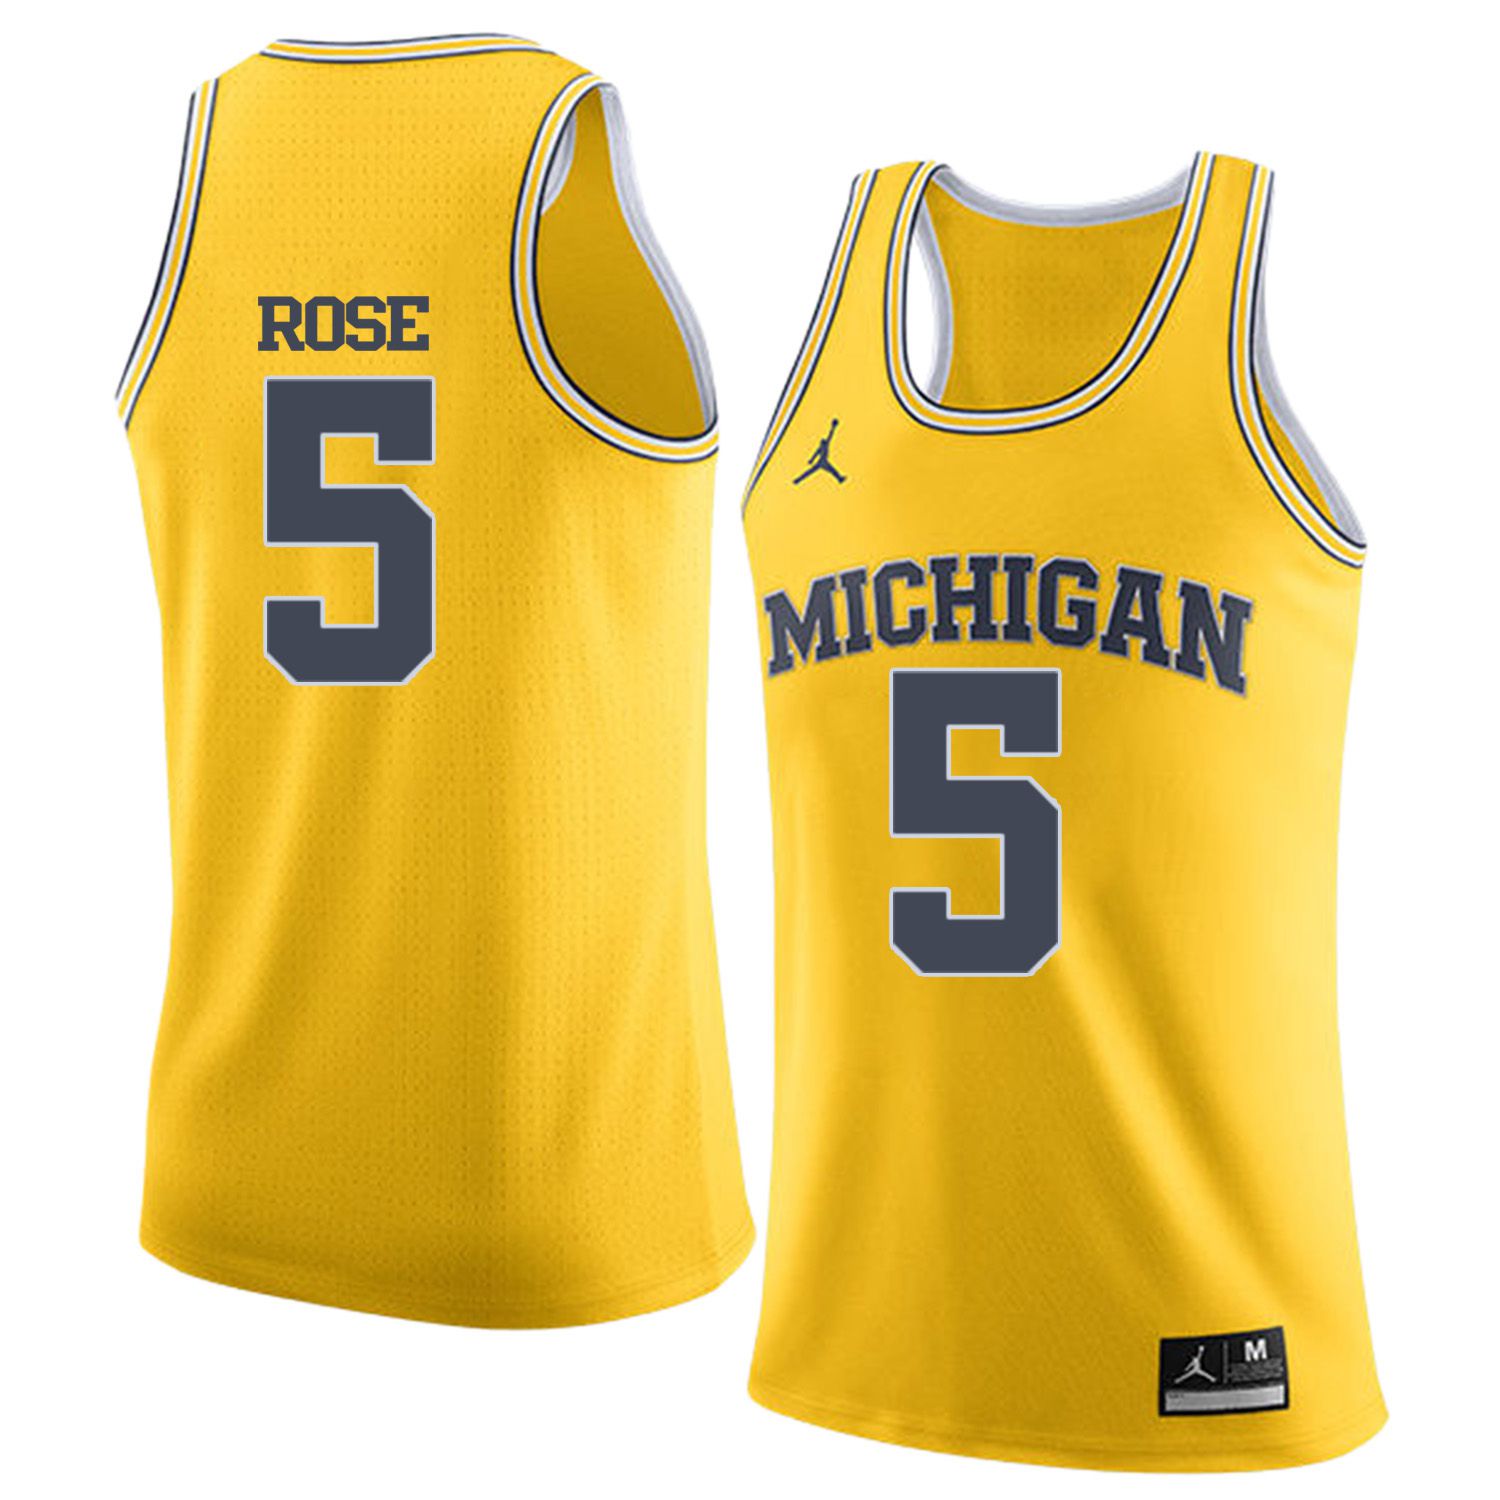 Men Jordan University of Michigan Basketball Yellow #5 Rose Customized NCAA Jerseys